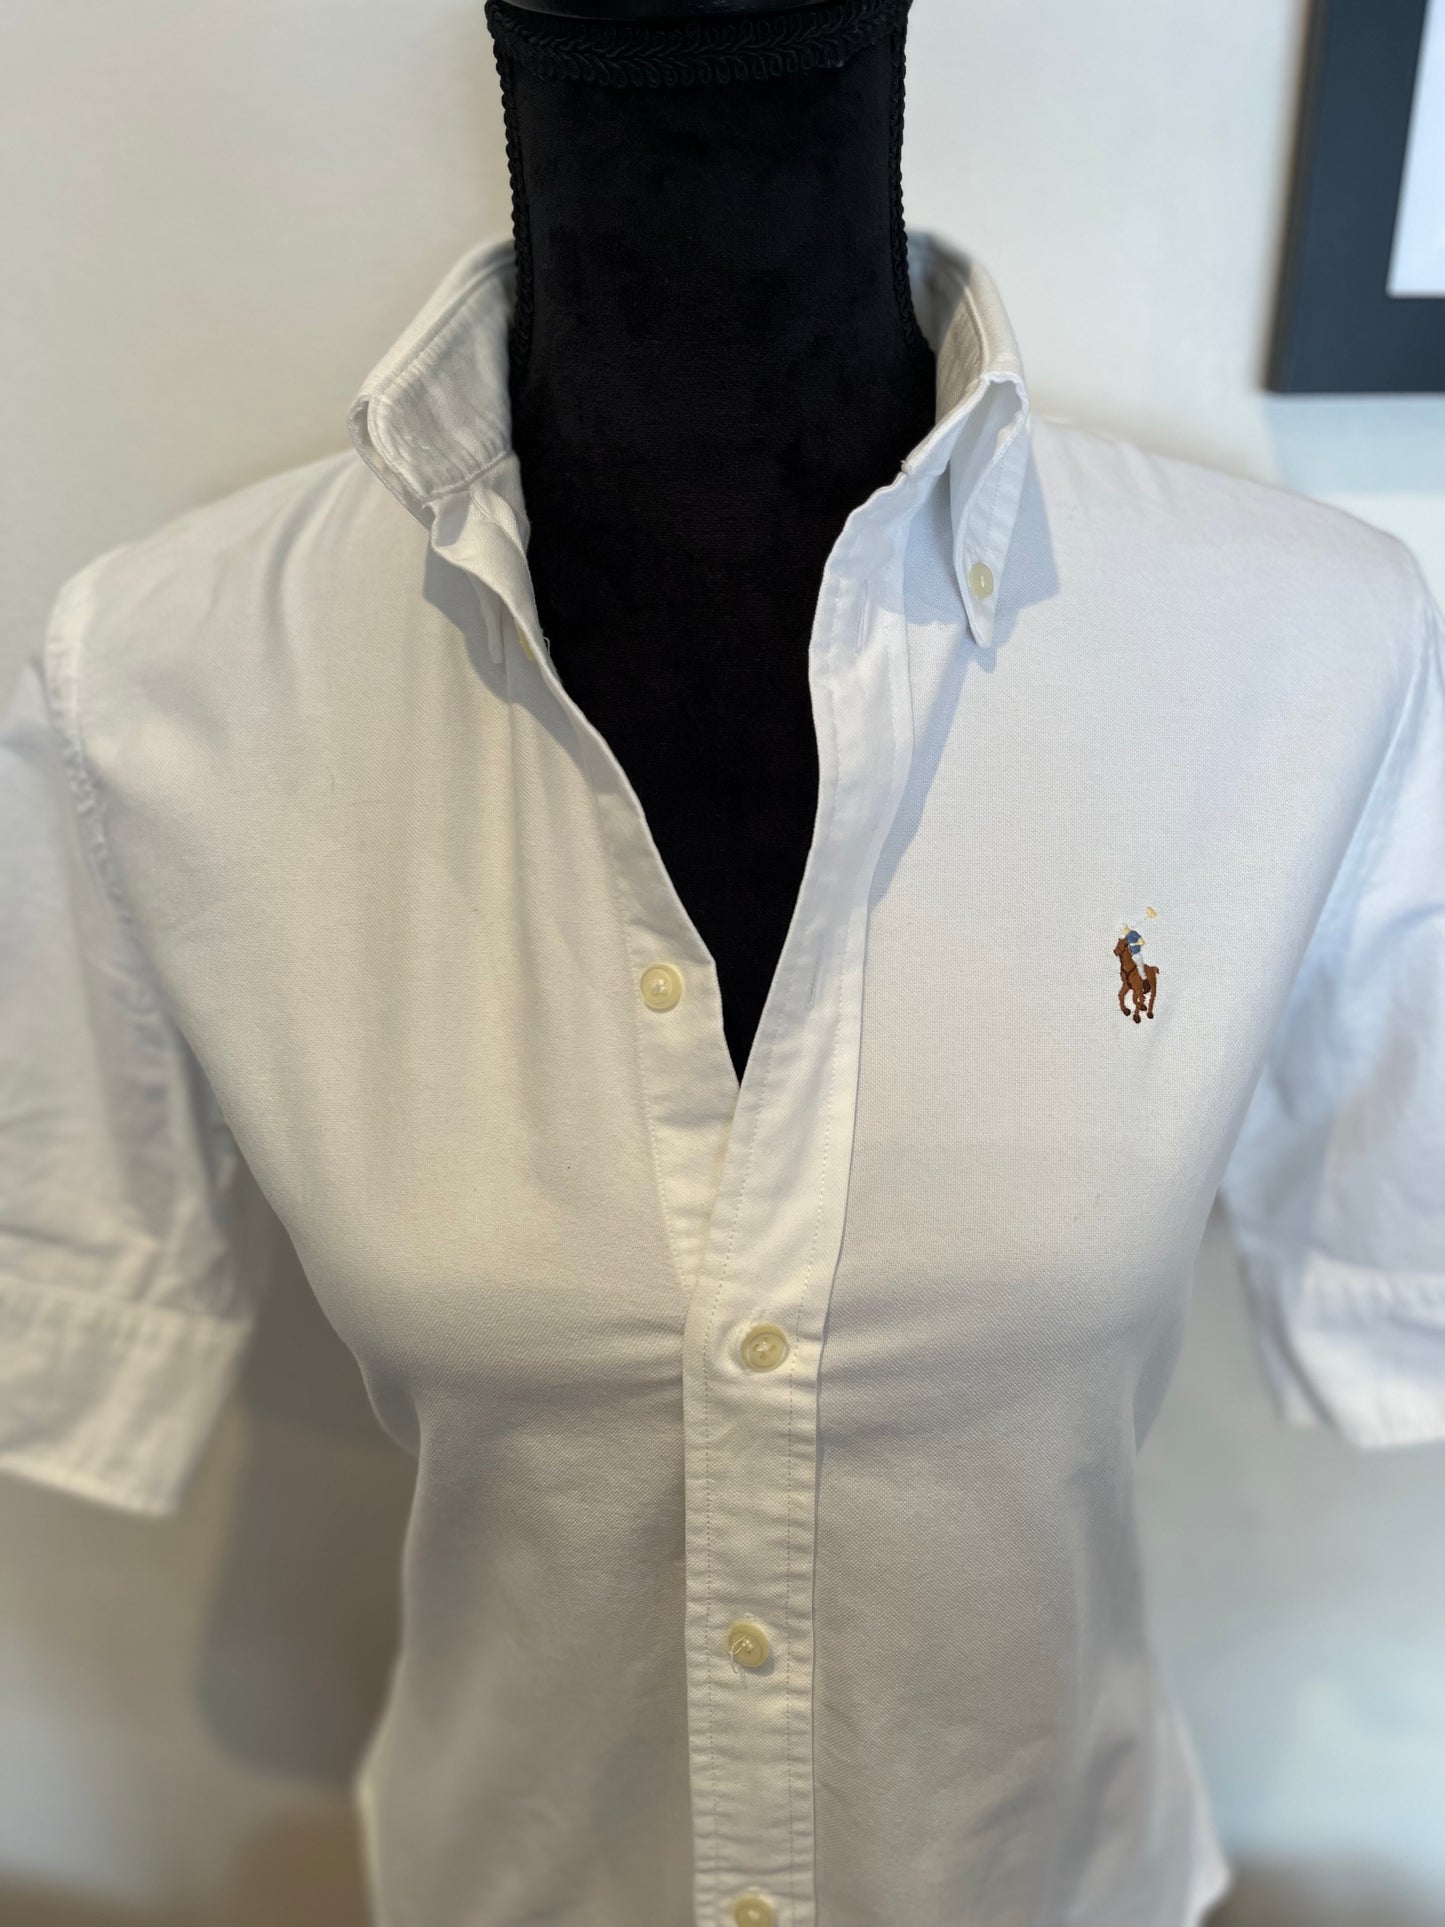 Ralph Lauren Women’s 100% Cotton White Short Sleeve Shirt Size S Slim Fit